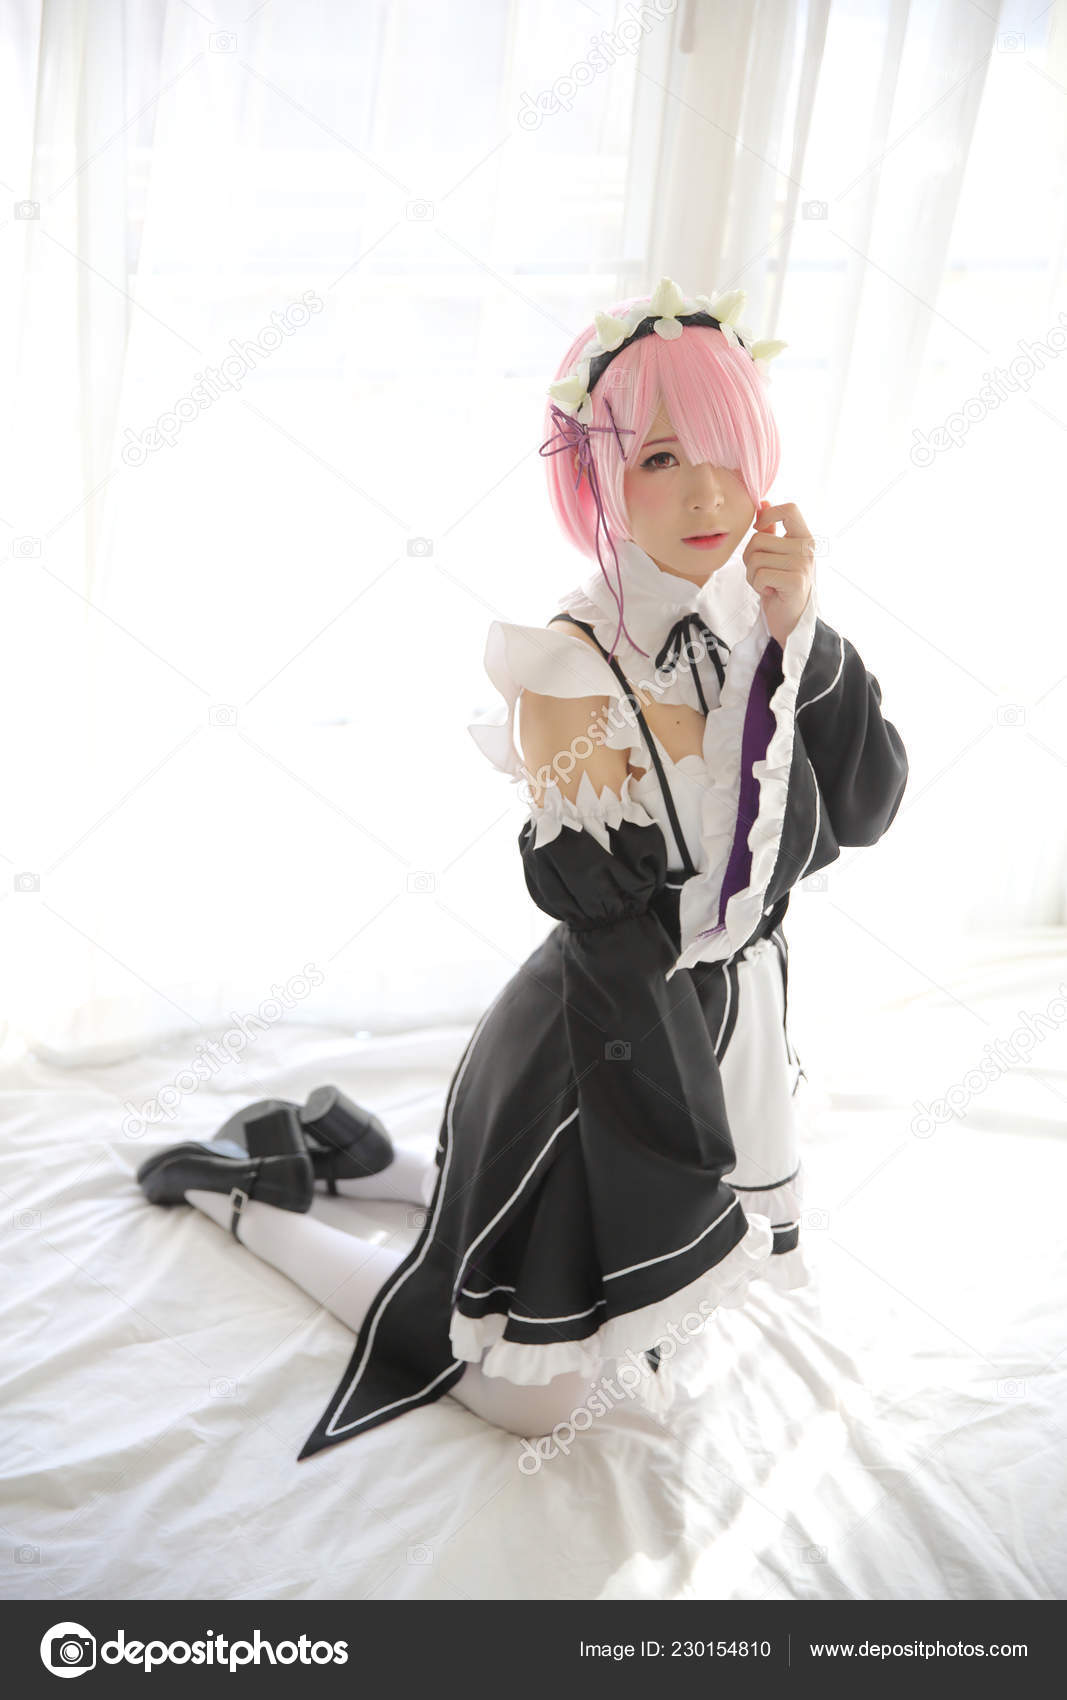 New Lady Female Women Cosplay Costume Japanese Anime Long Girl Maid Dress